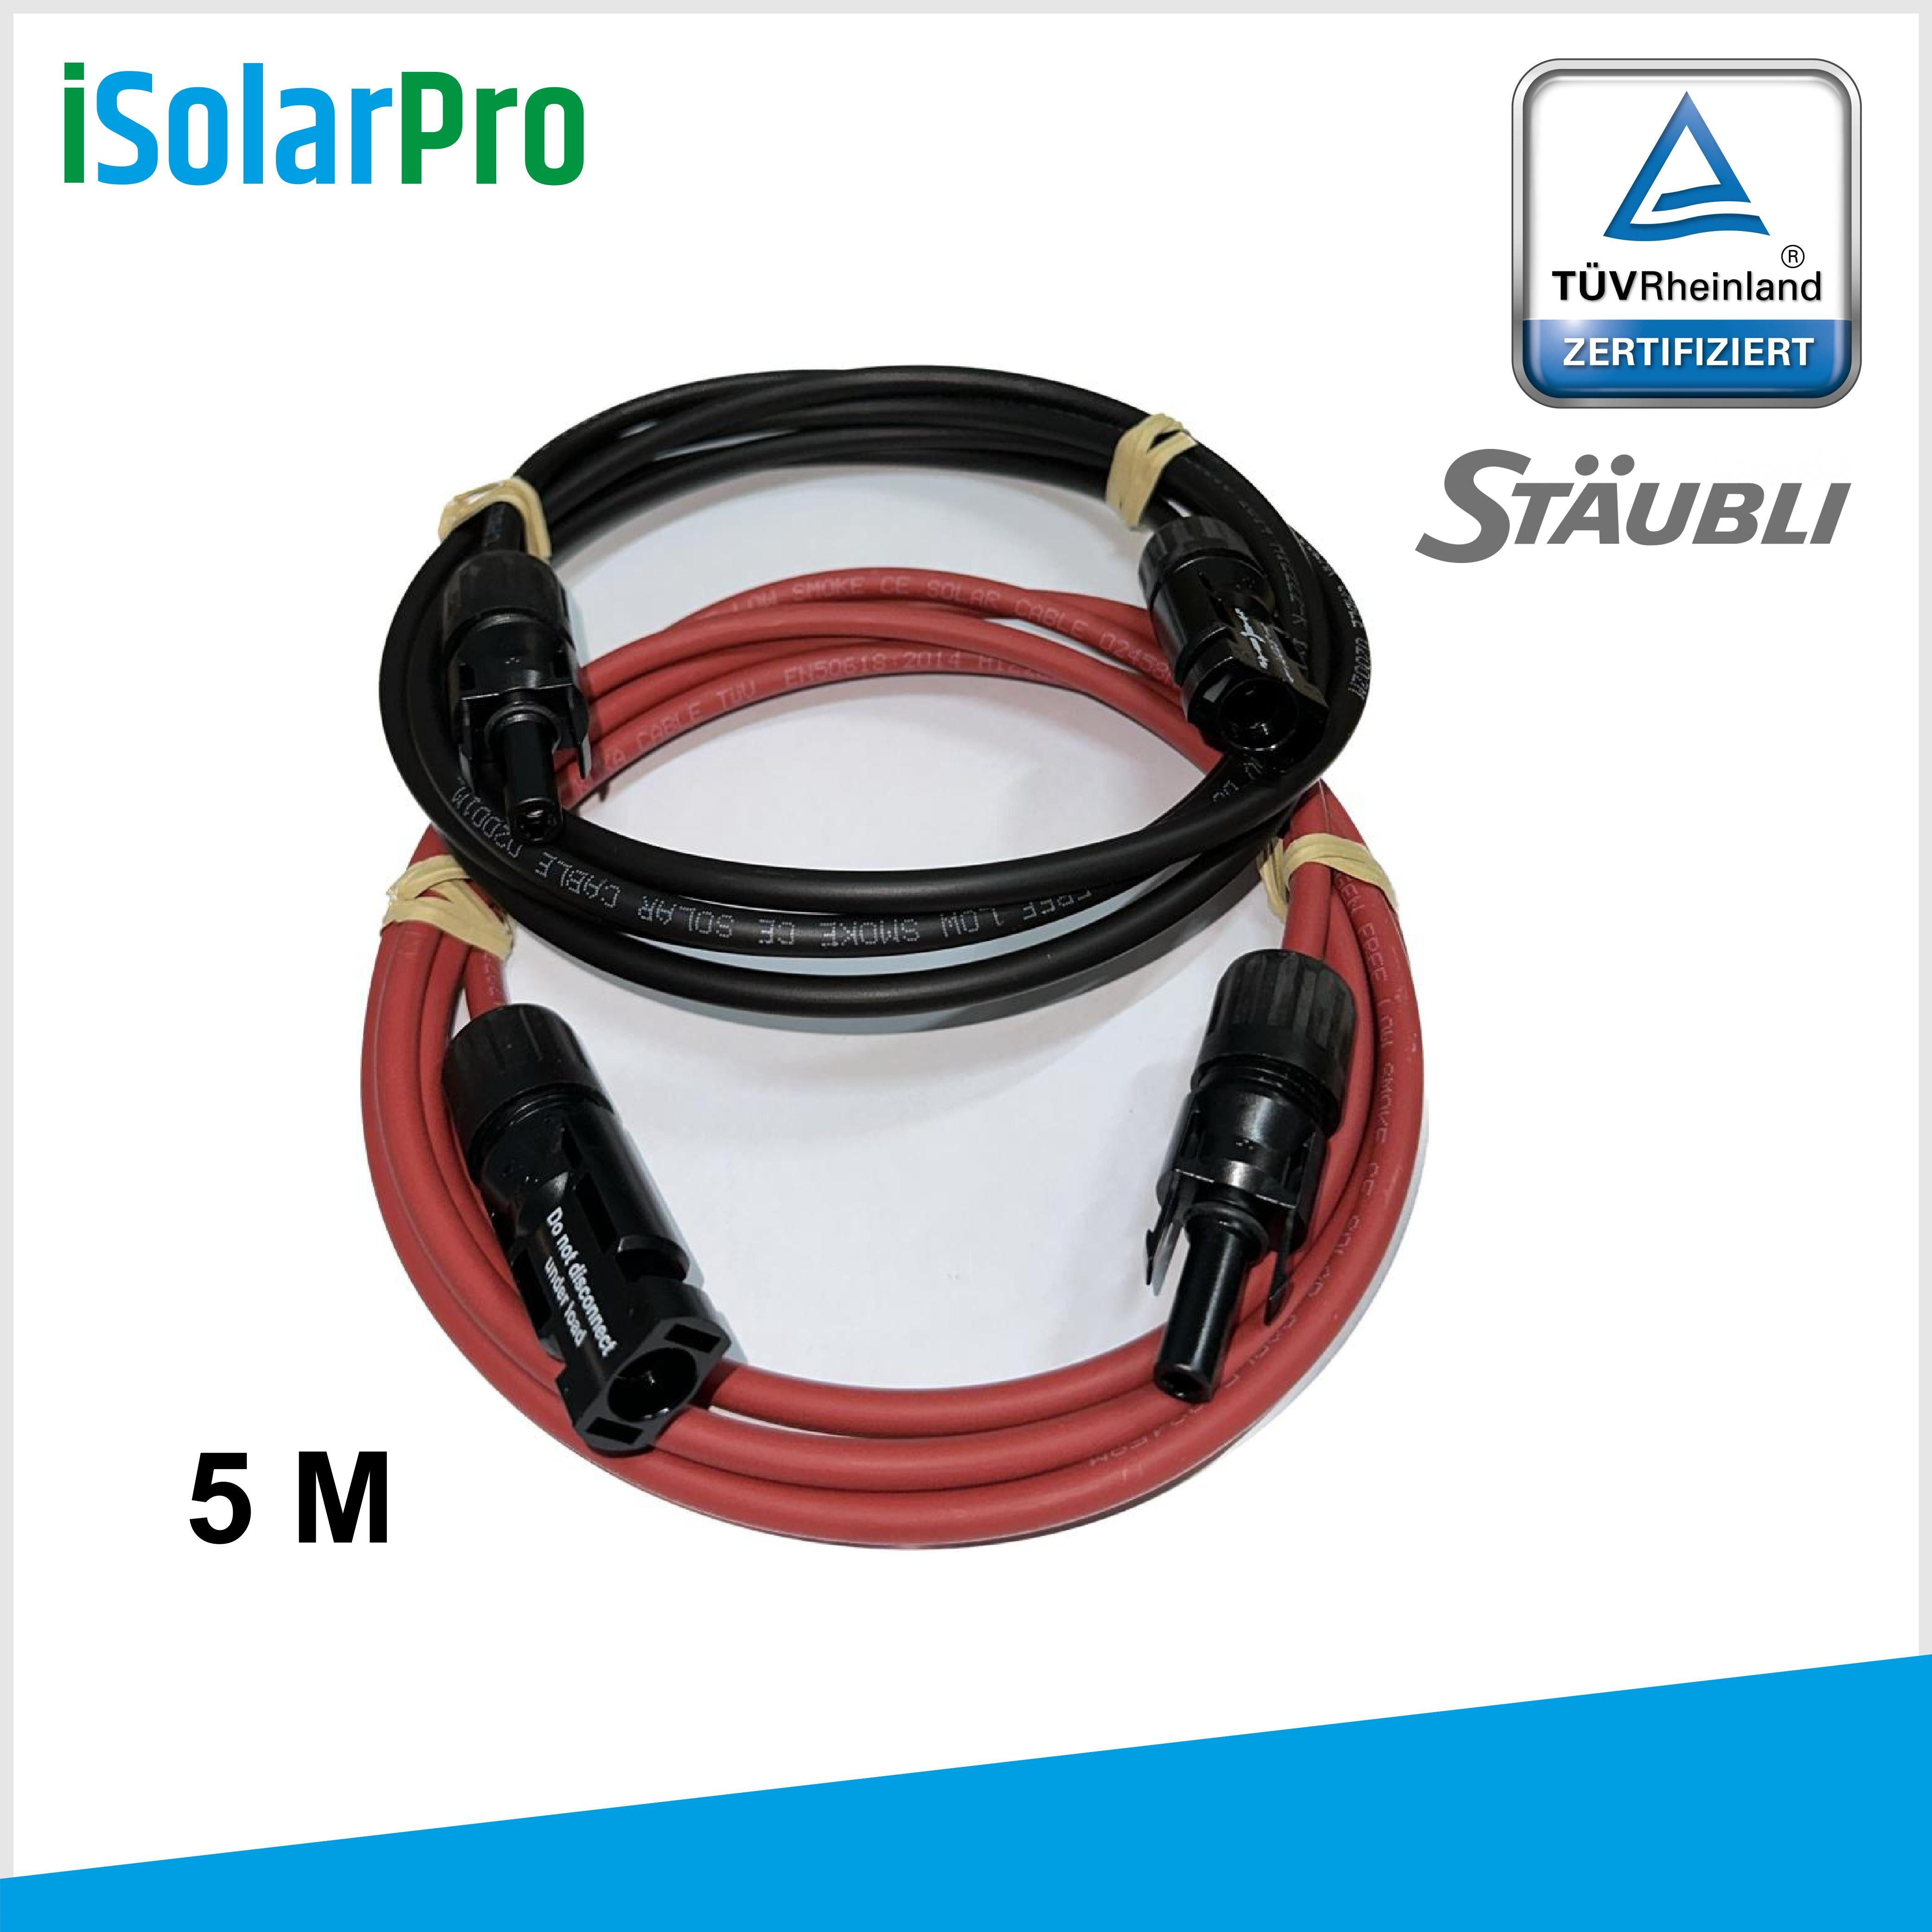 2X 5m solar cable extension cable red/black solar plug Stäubli